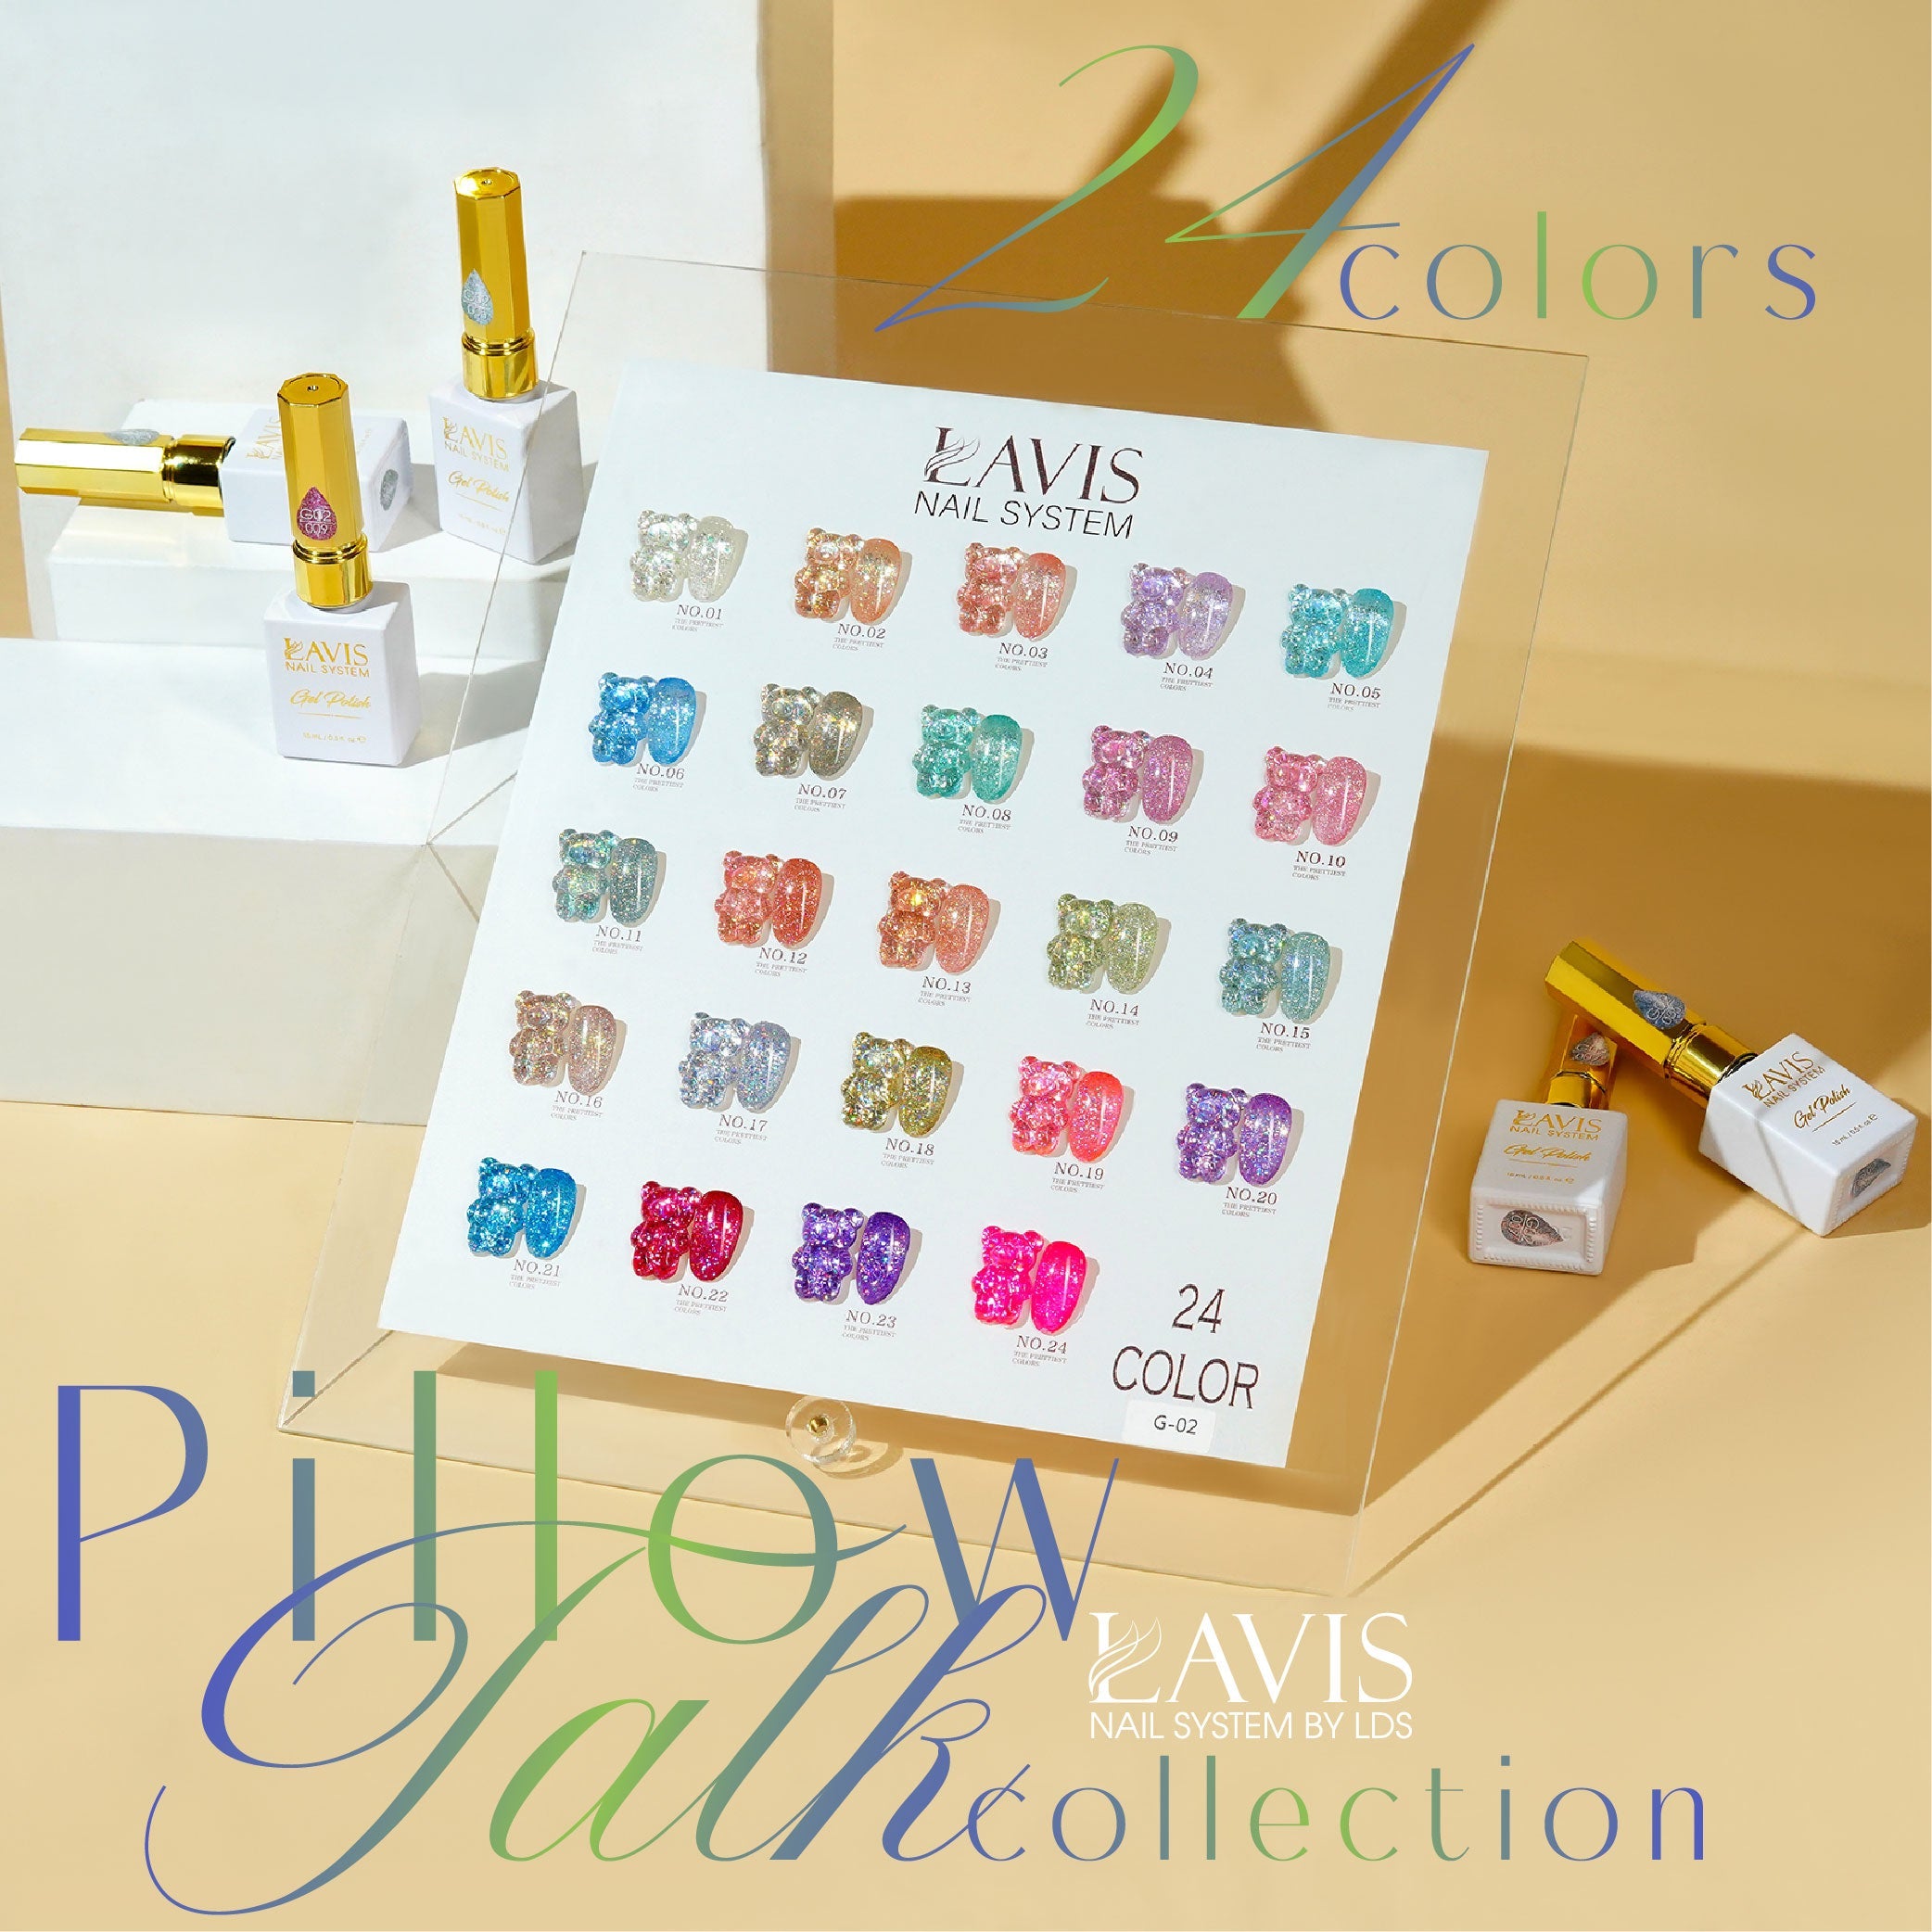 LAVIS Glitter G02 - 05 - Gel Polish 0.5 oz - Pillow Talk Collection